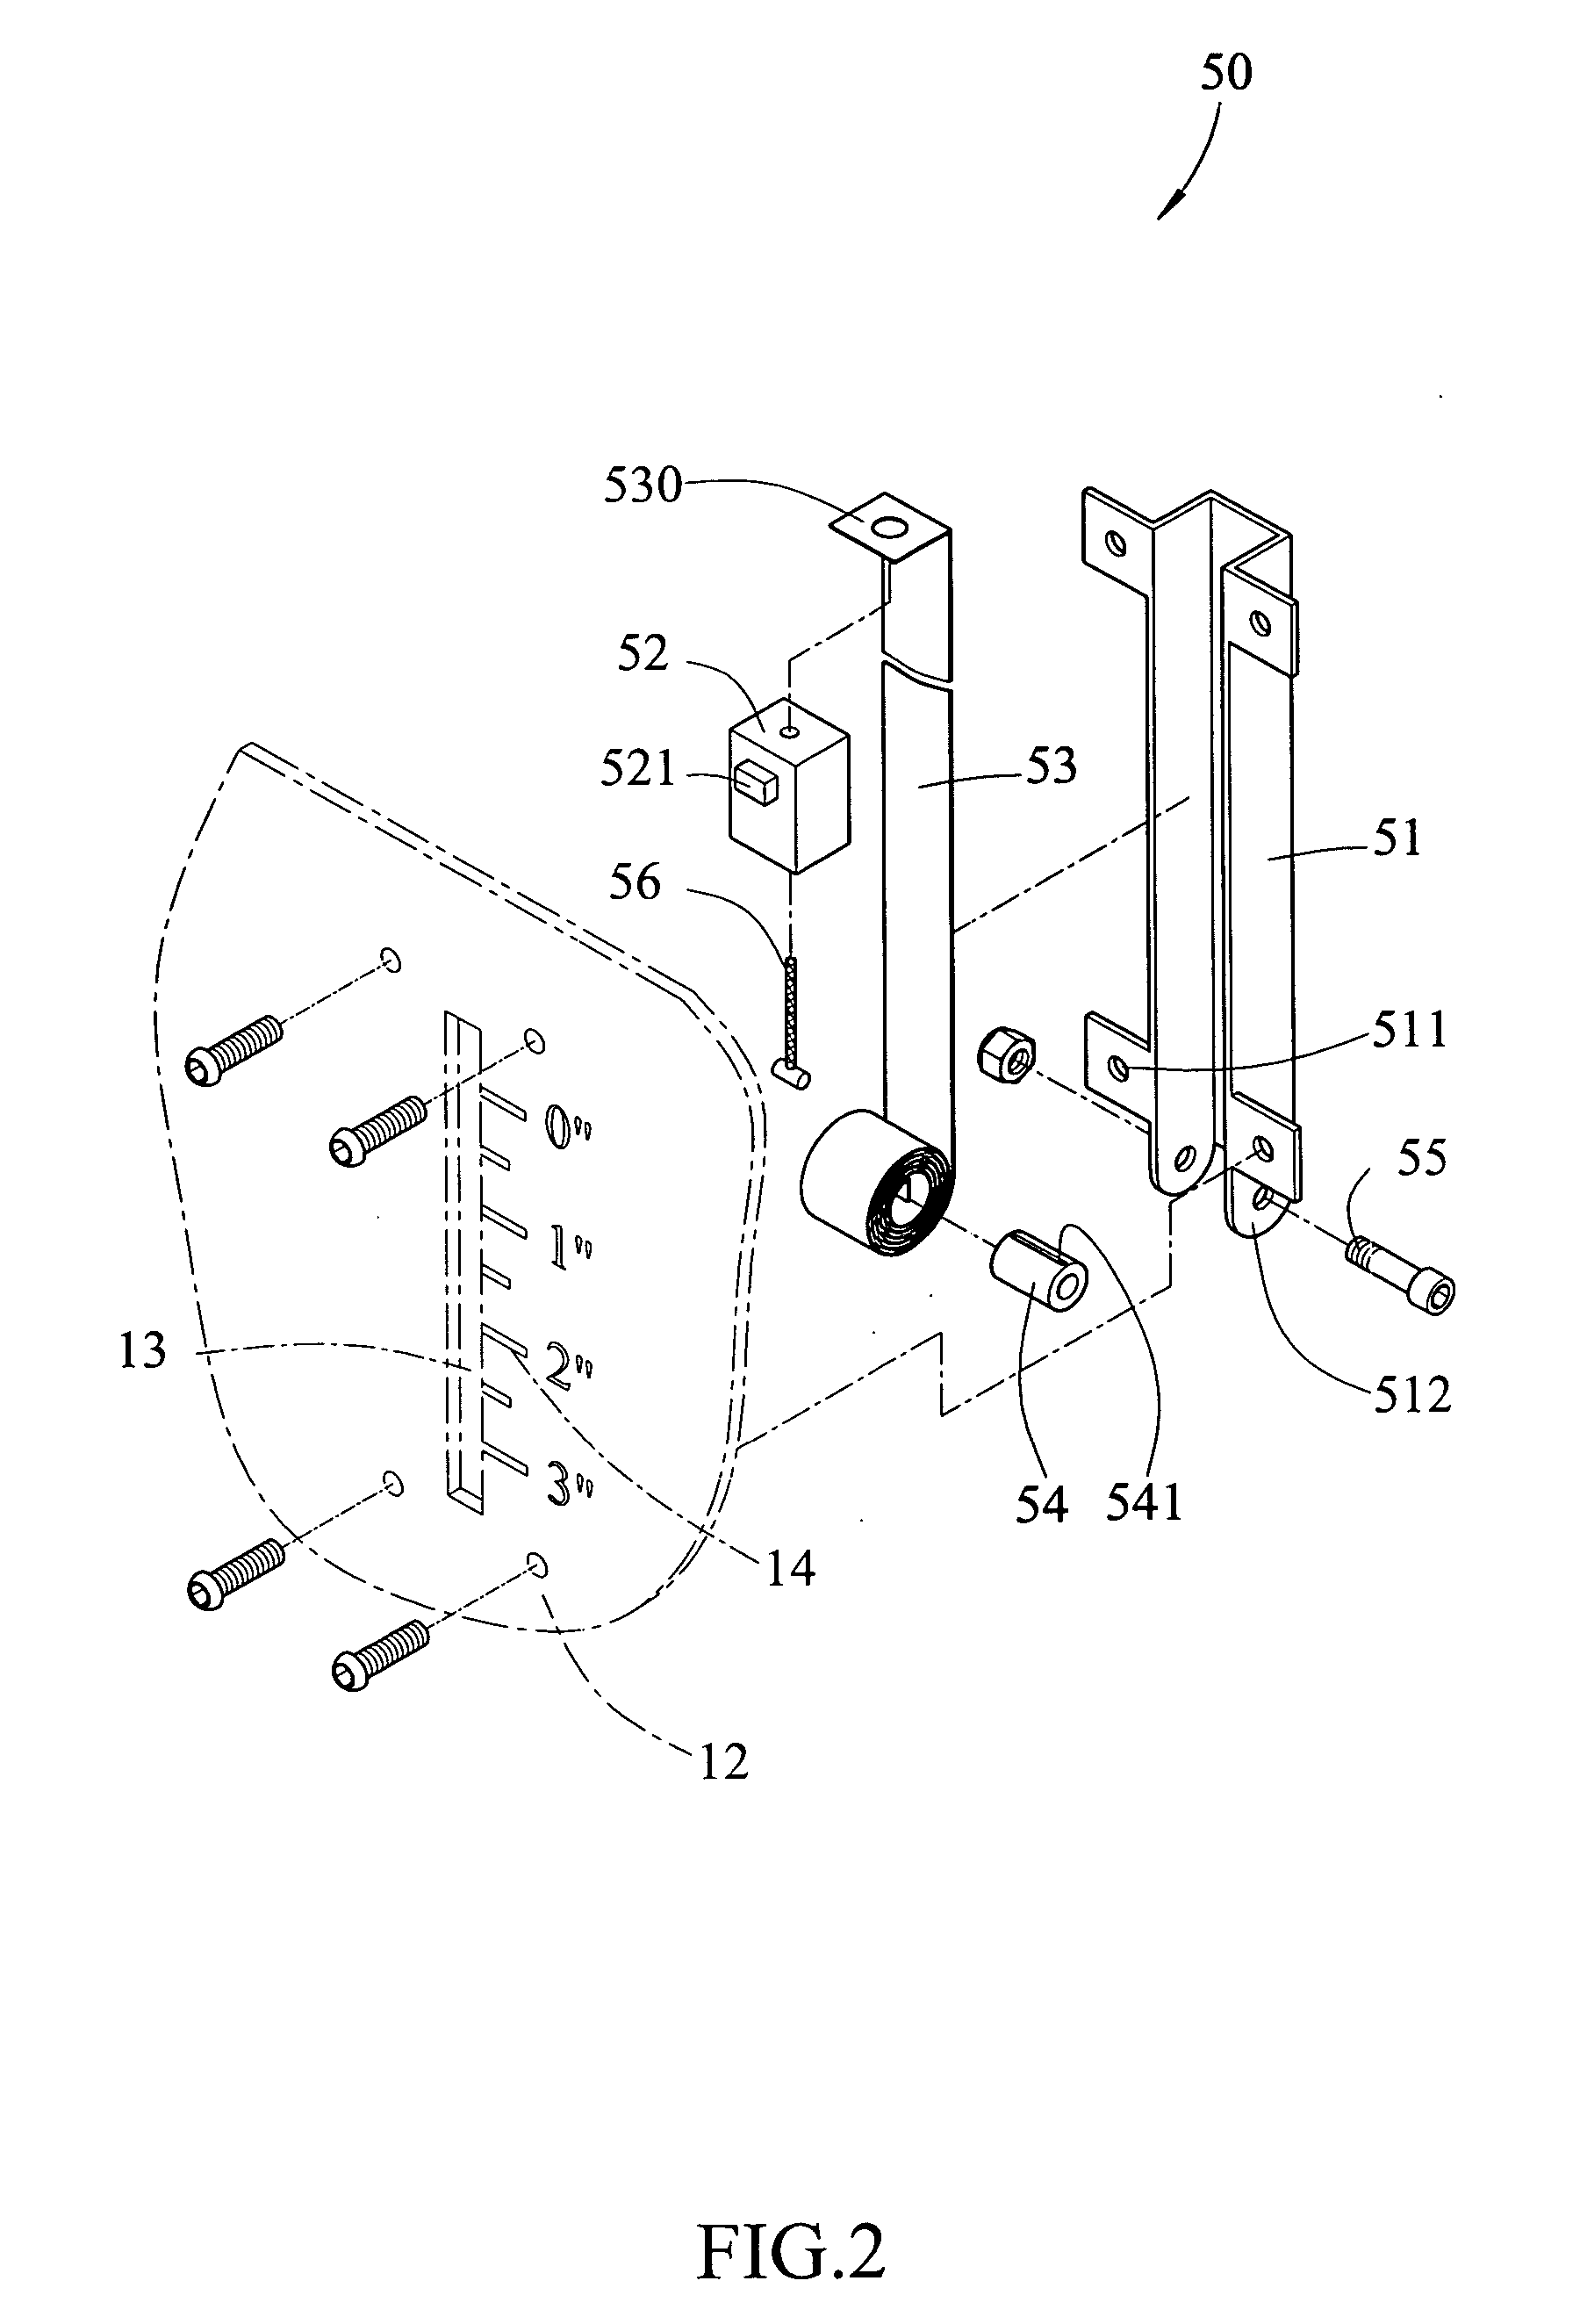 Display device for circular saw